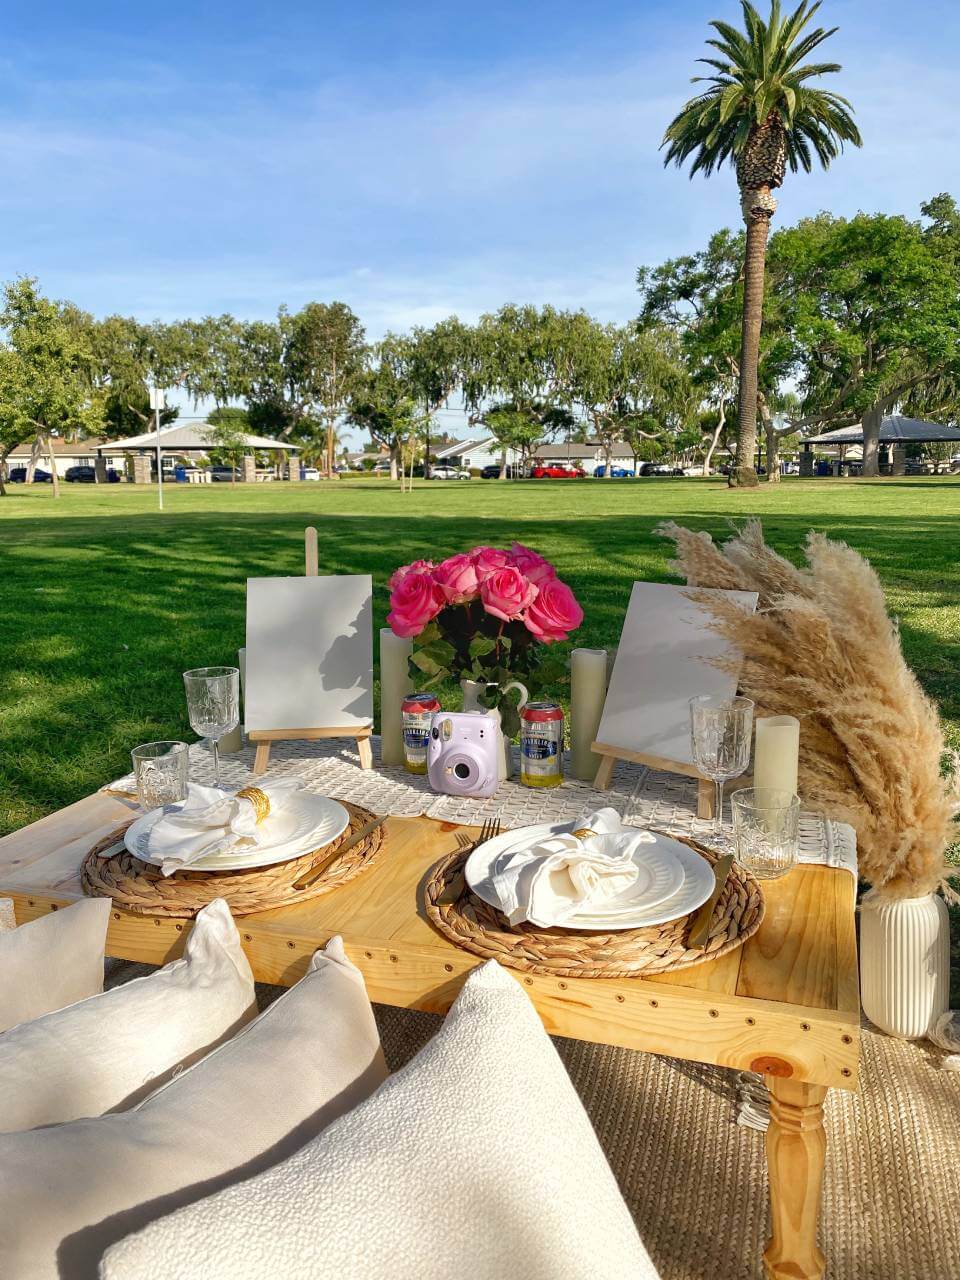 outdoor picnic proposal setup